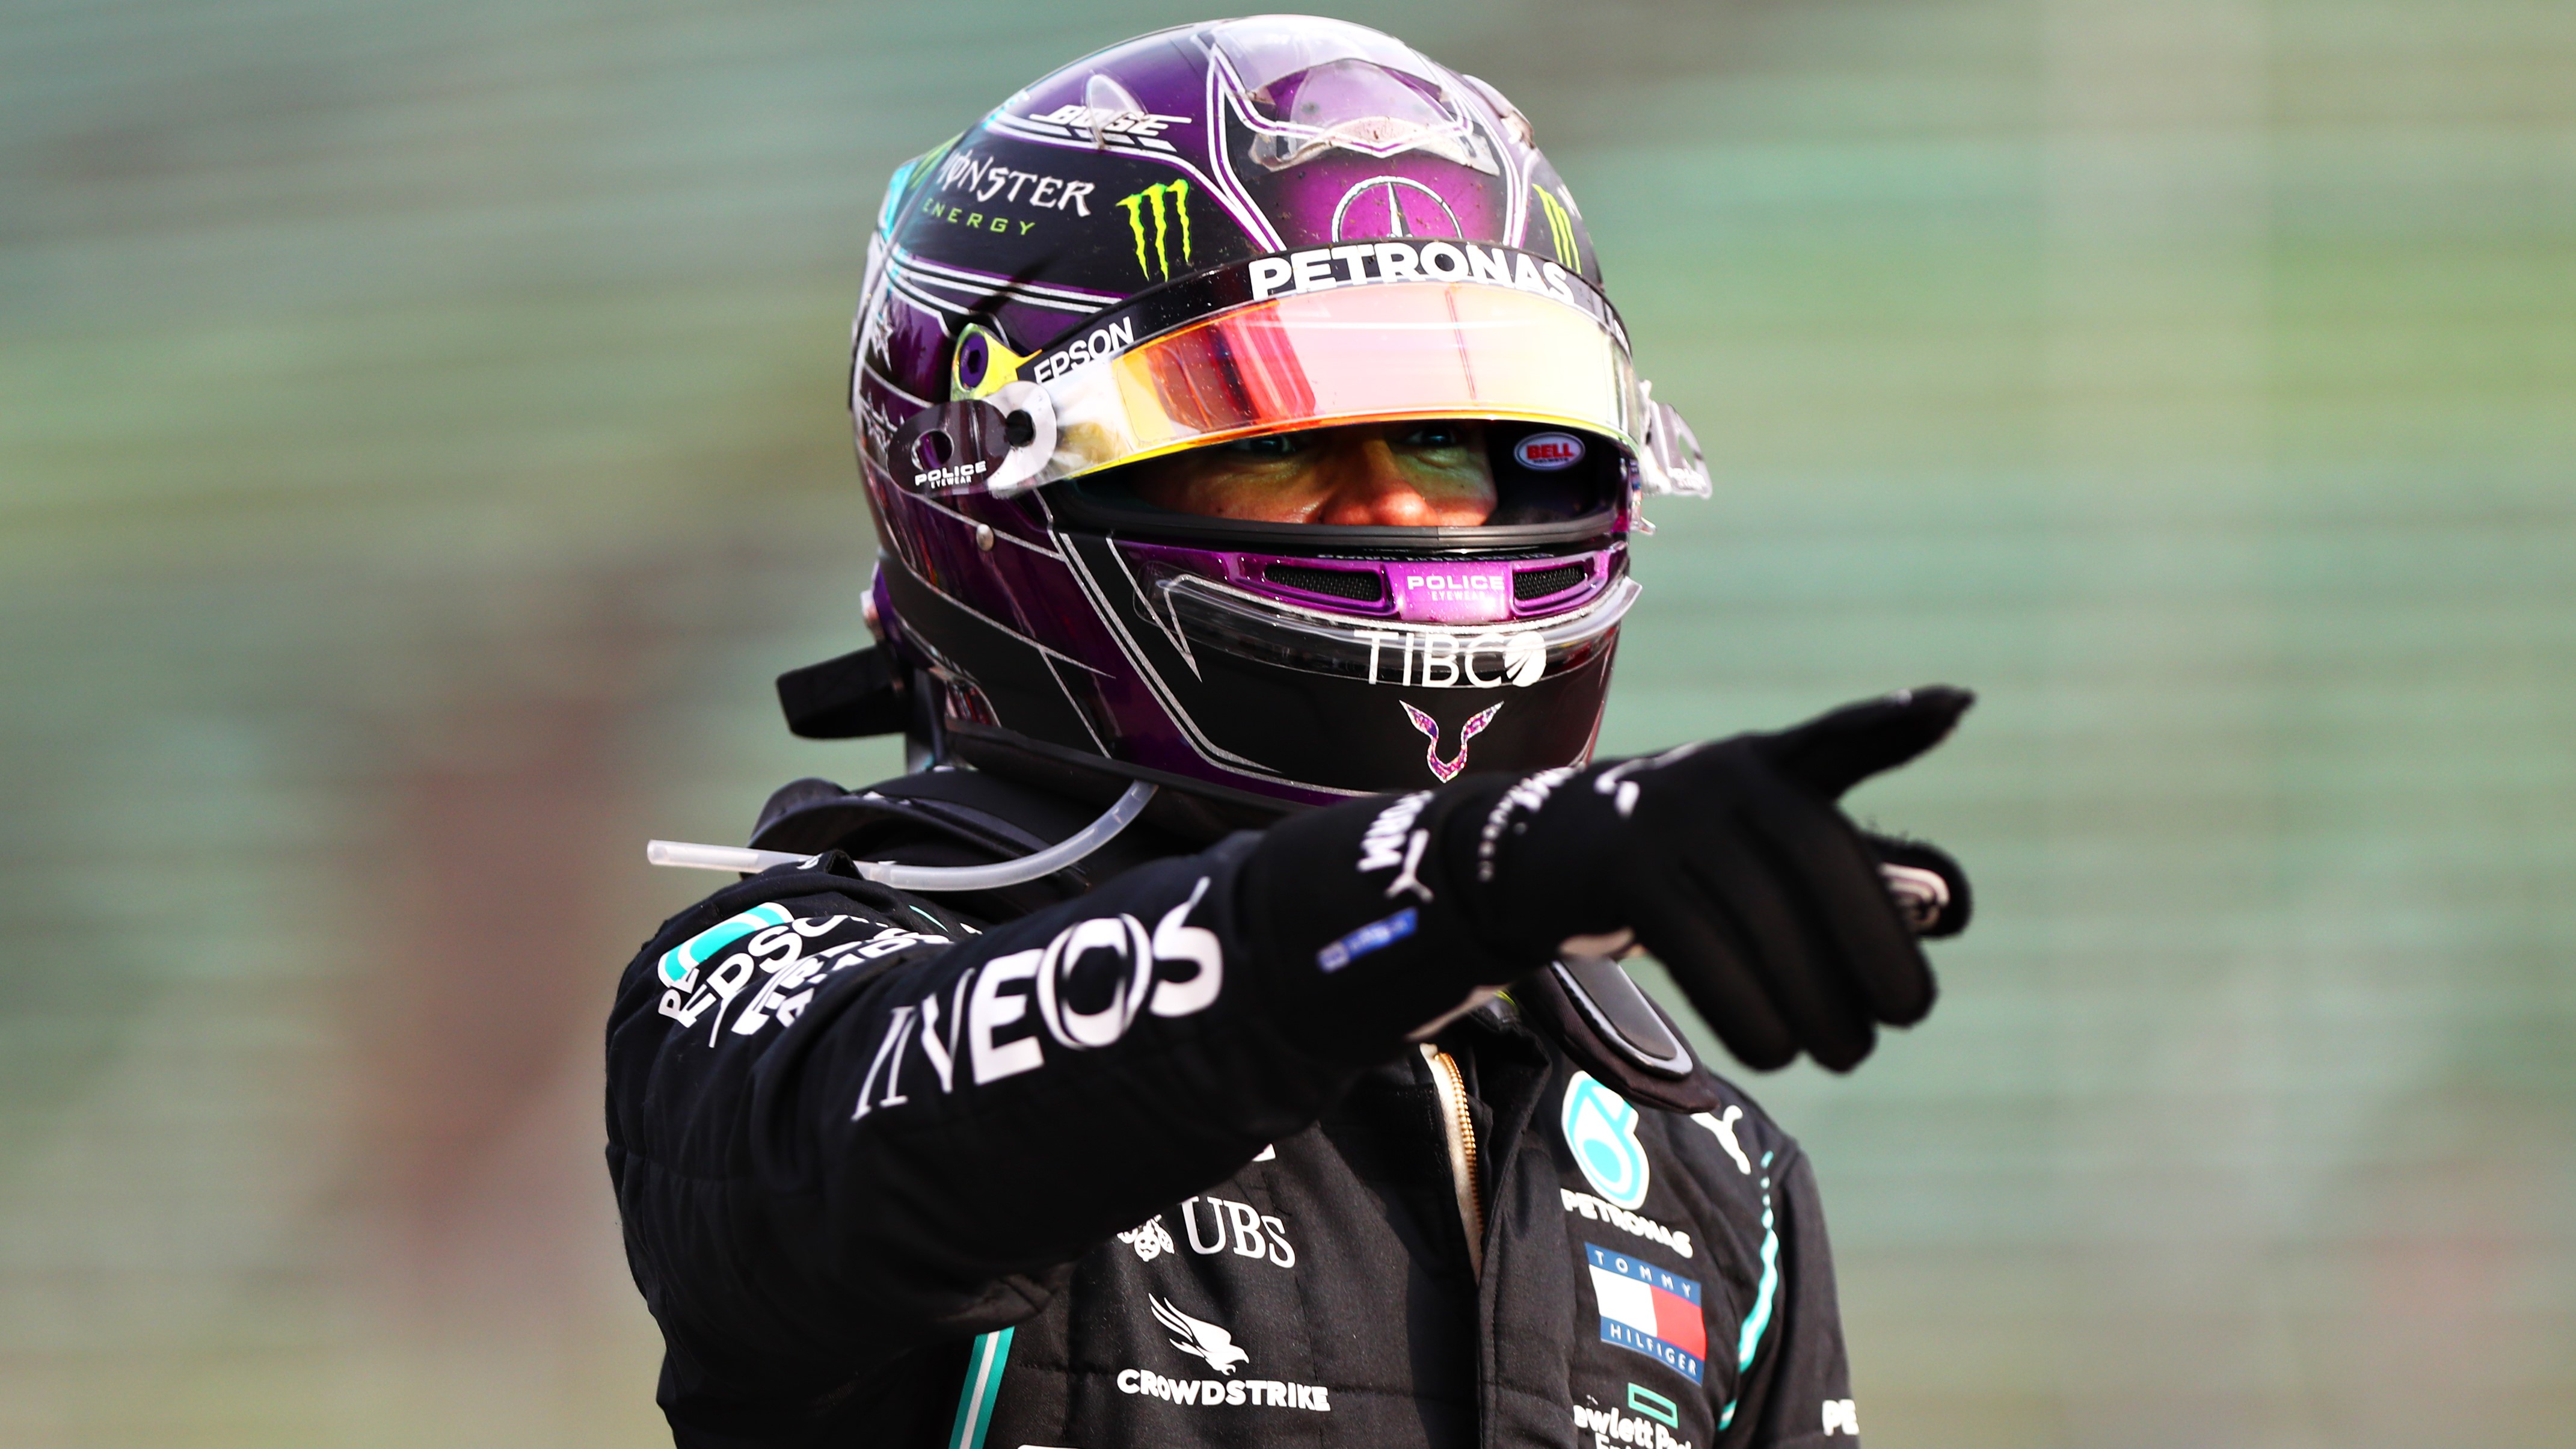 Lewis Hamilton wearing full F1 gear